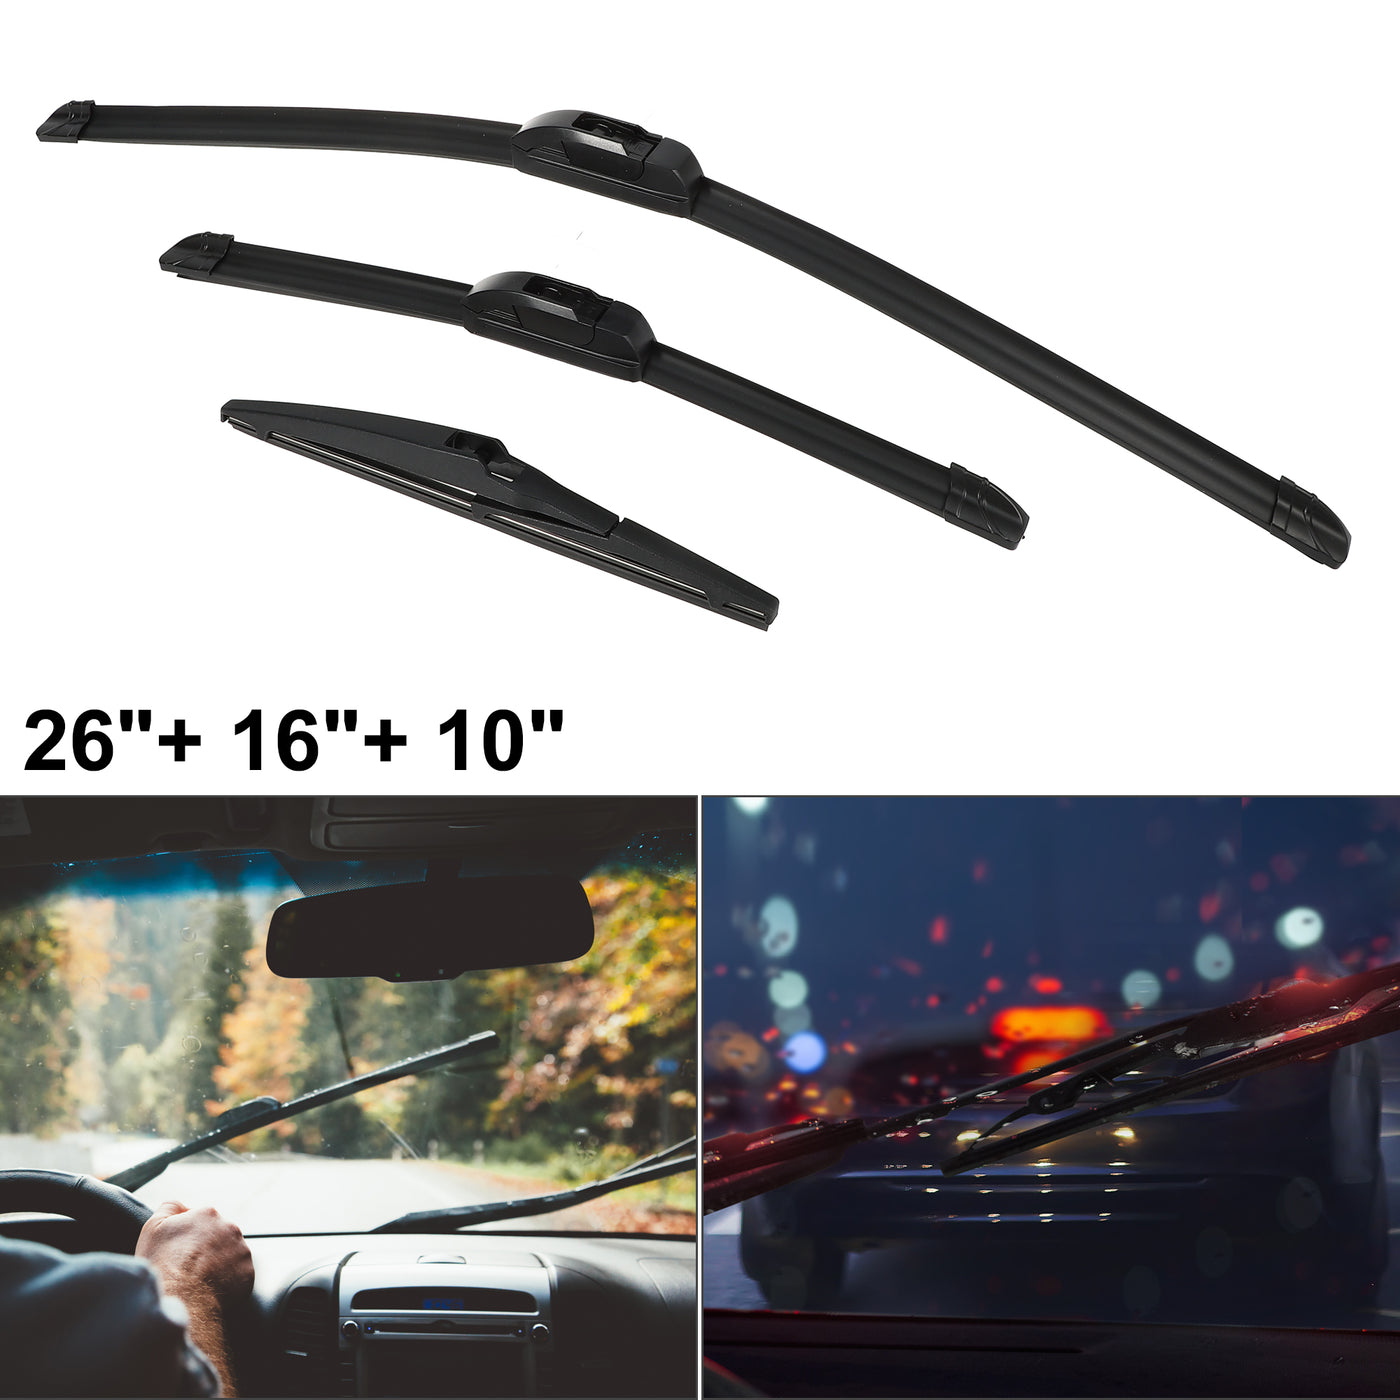 ACROPIX Front Rear Windshield Wiper Blade Set Car Wiper Blade Fit for Toyota RAV4 2013-2018 - Pack of 3 Black